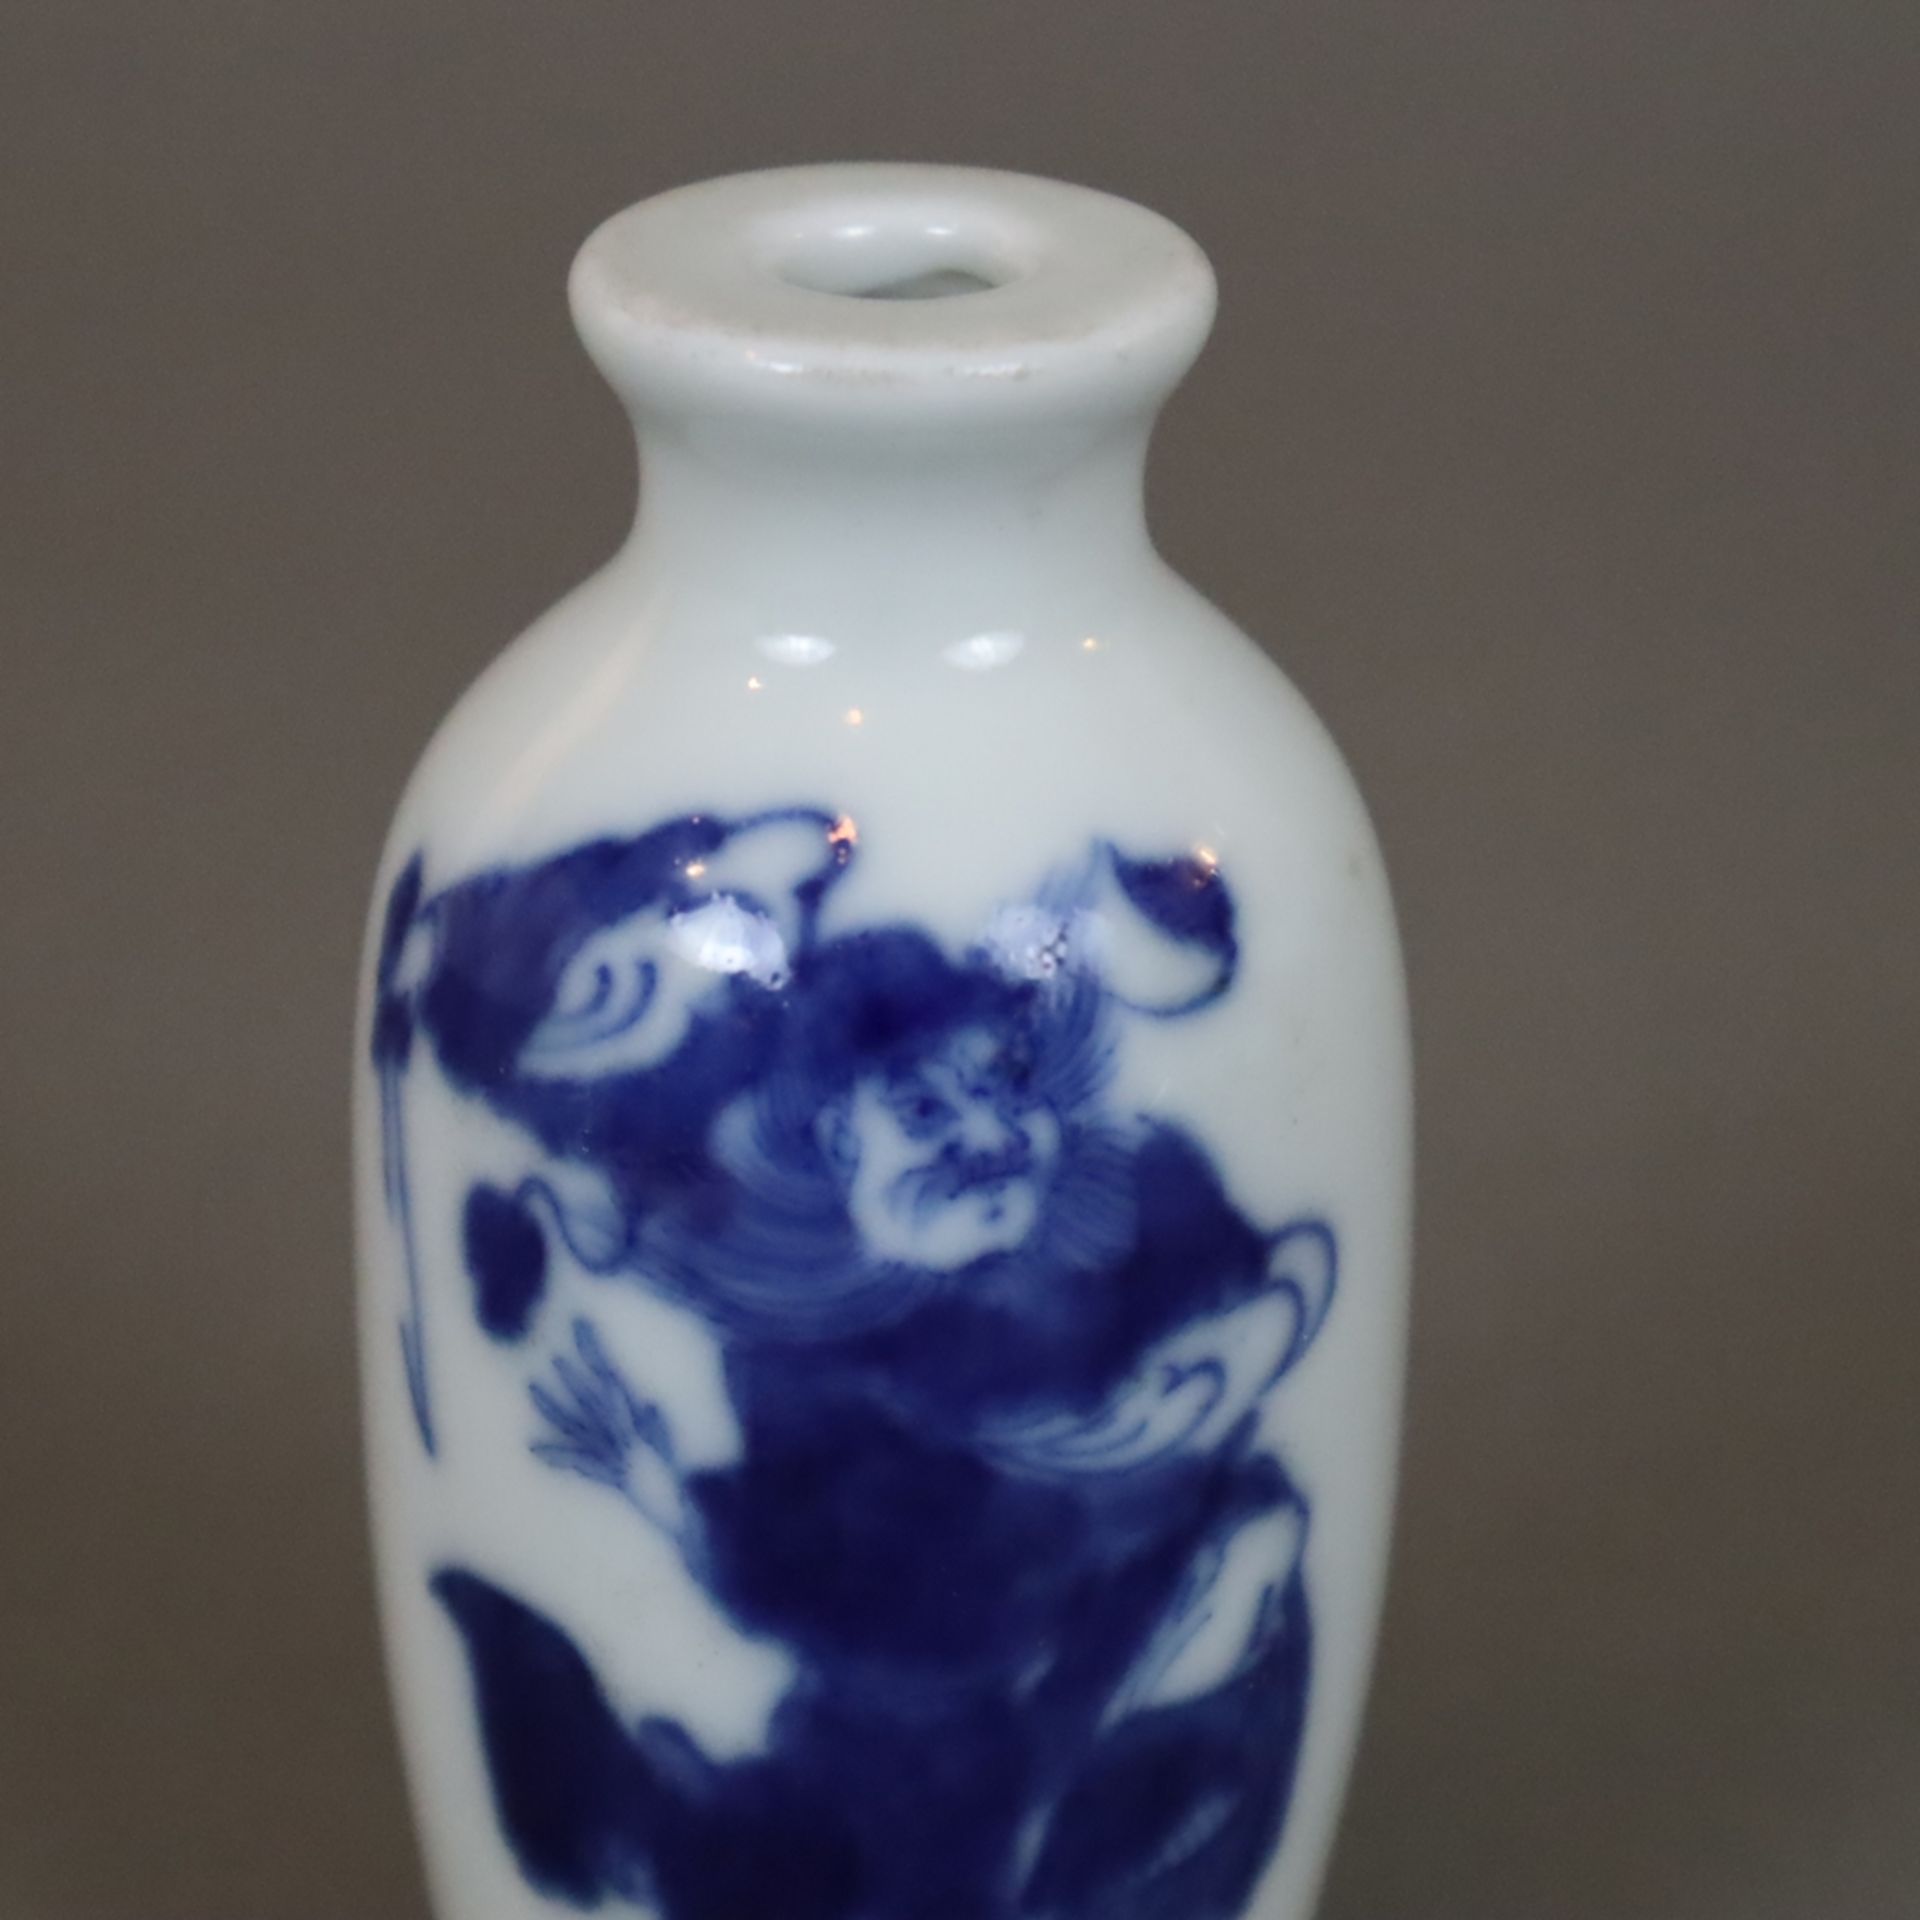 Snuffbottle - Porzellan in Unterglasurblau bemalt mit Dämonen-Bezwinger Zhong Kui, im Boden "Qianlo - Image 2 of 6